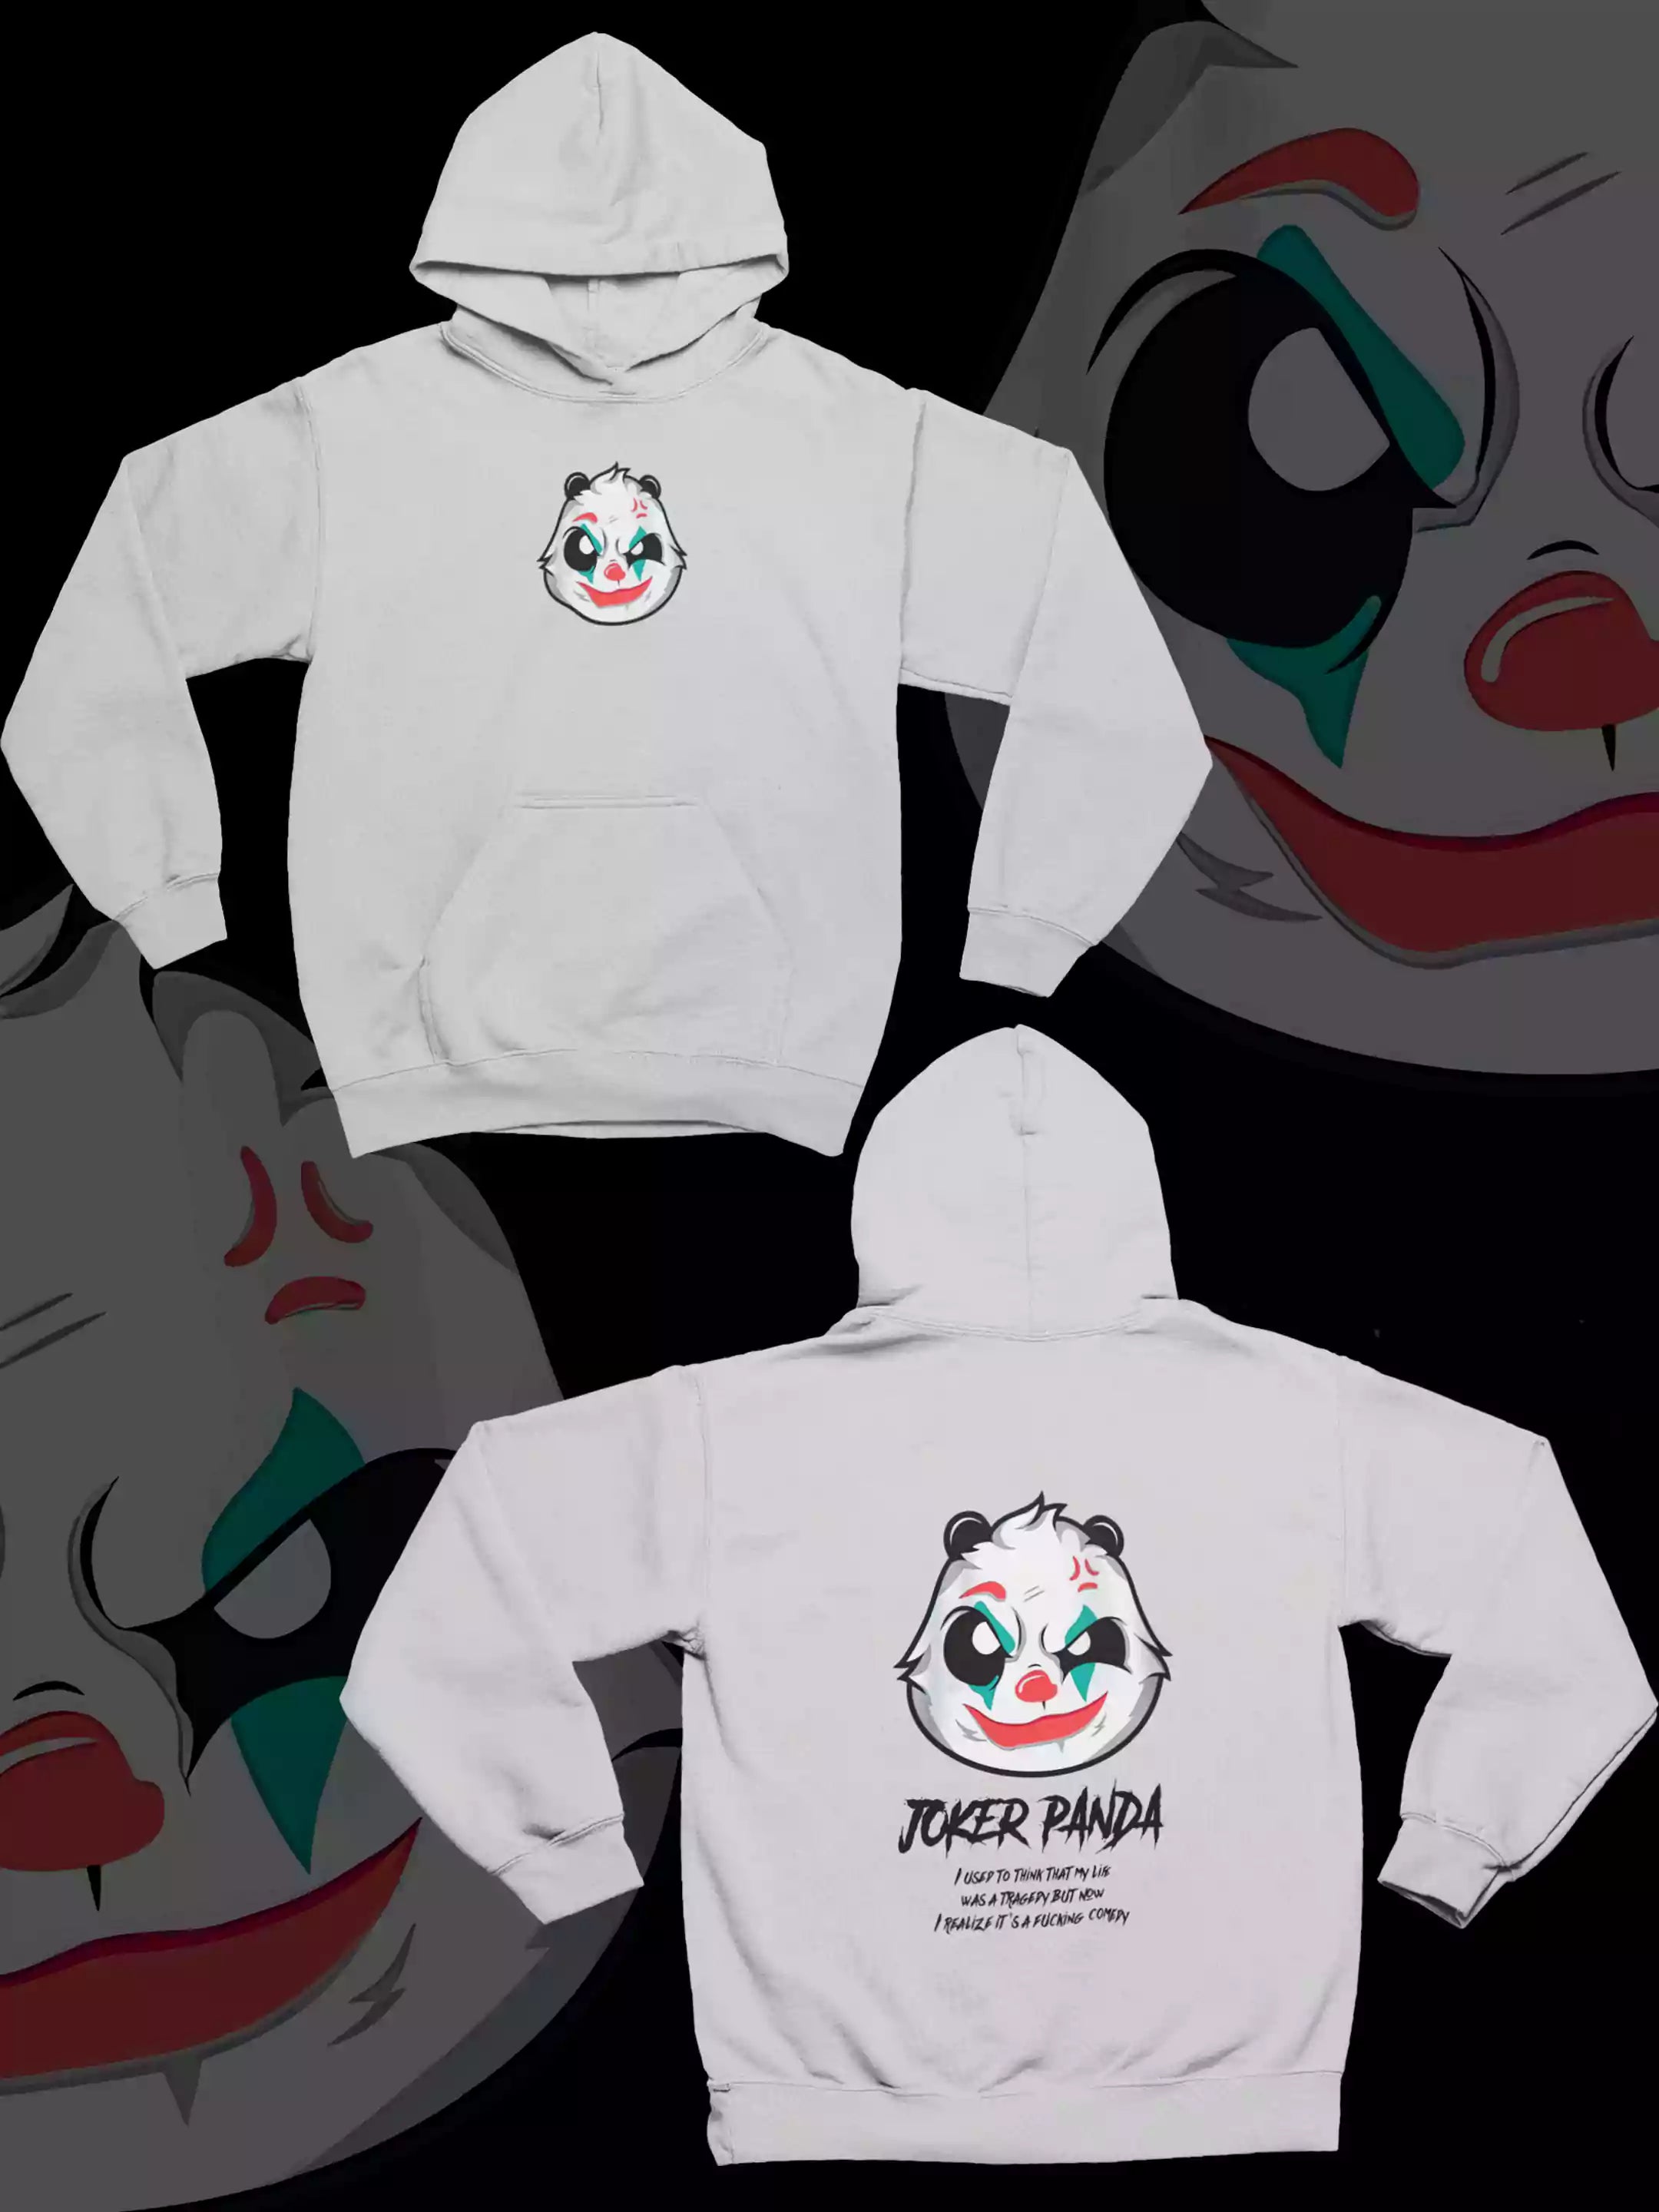 Joker panda - Sukhiaatma Unisex Graphic Printed Hoodie